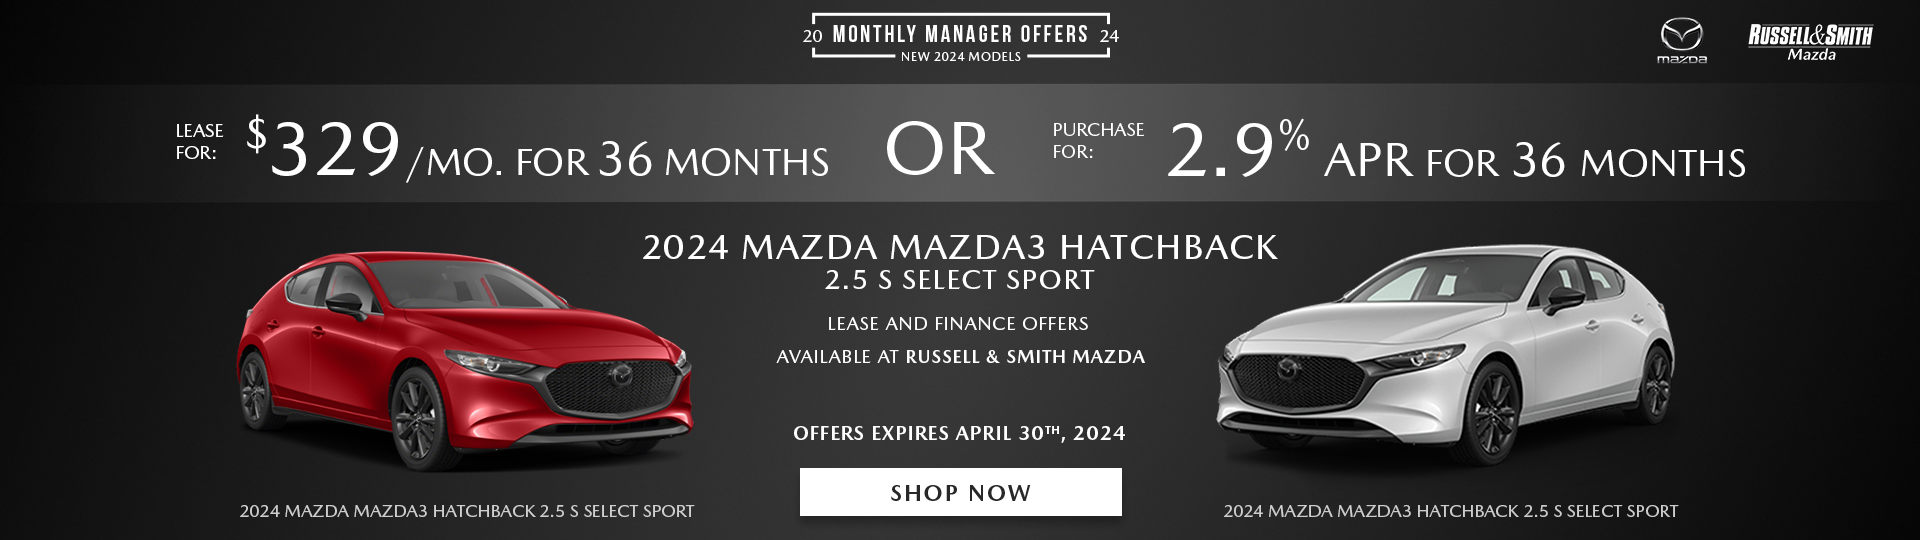 2024 Mazda3 Hatchback lease deals and finance specials